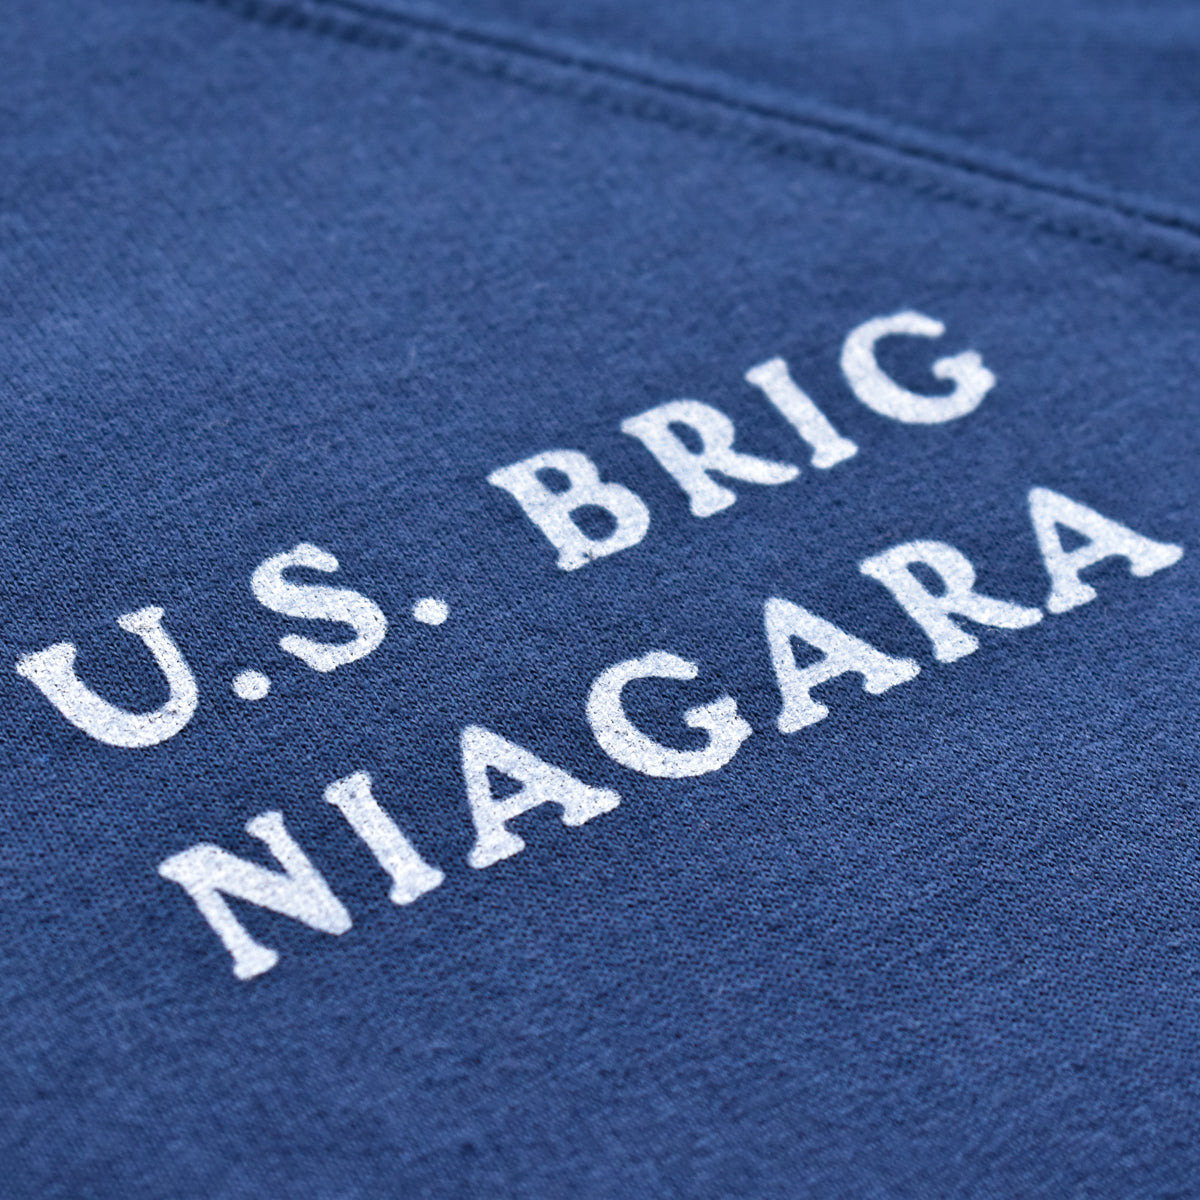 U.S. Brig Niagara Lightweight Terry Crew